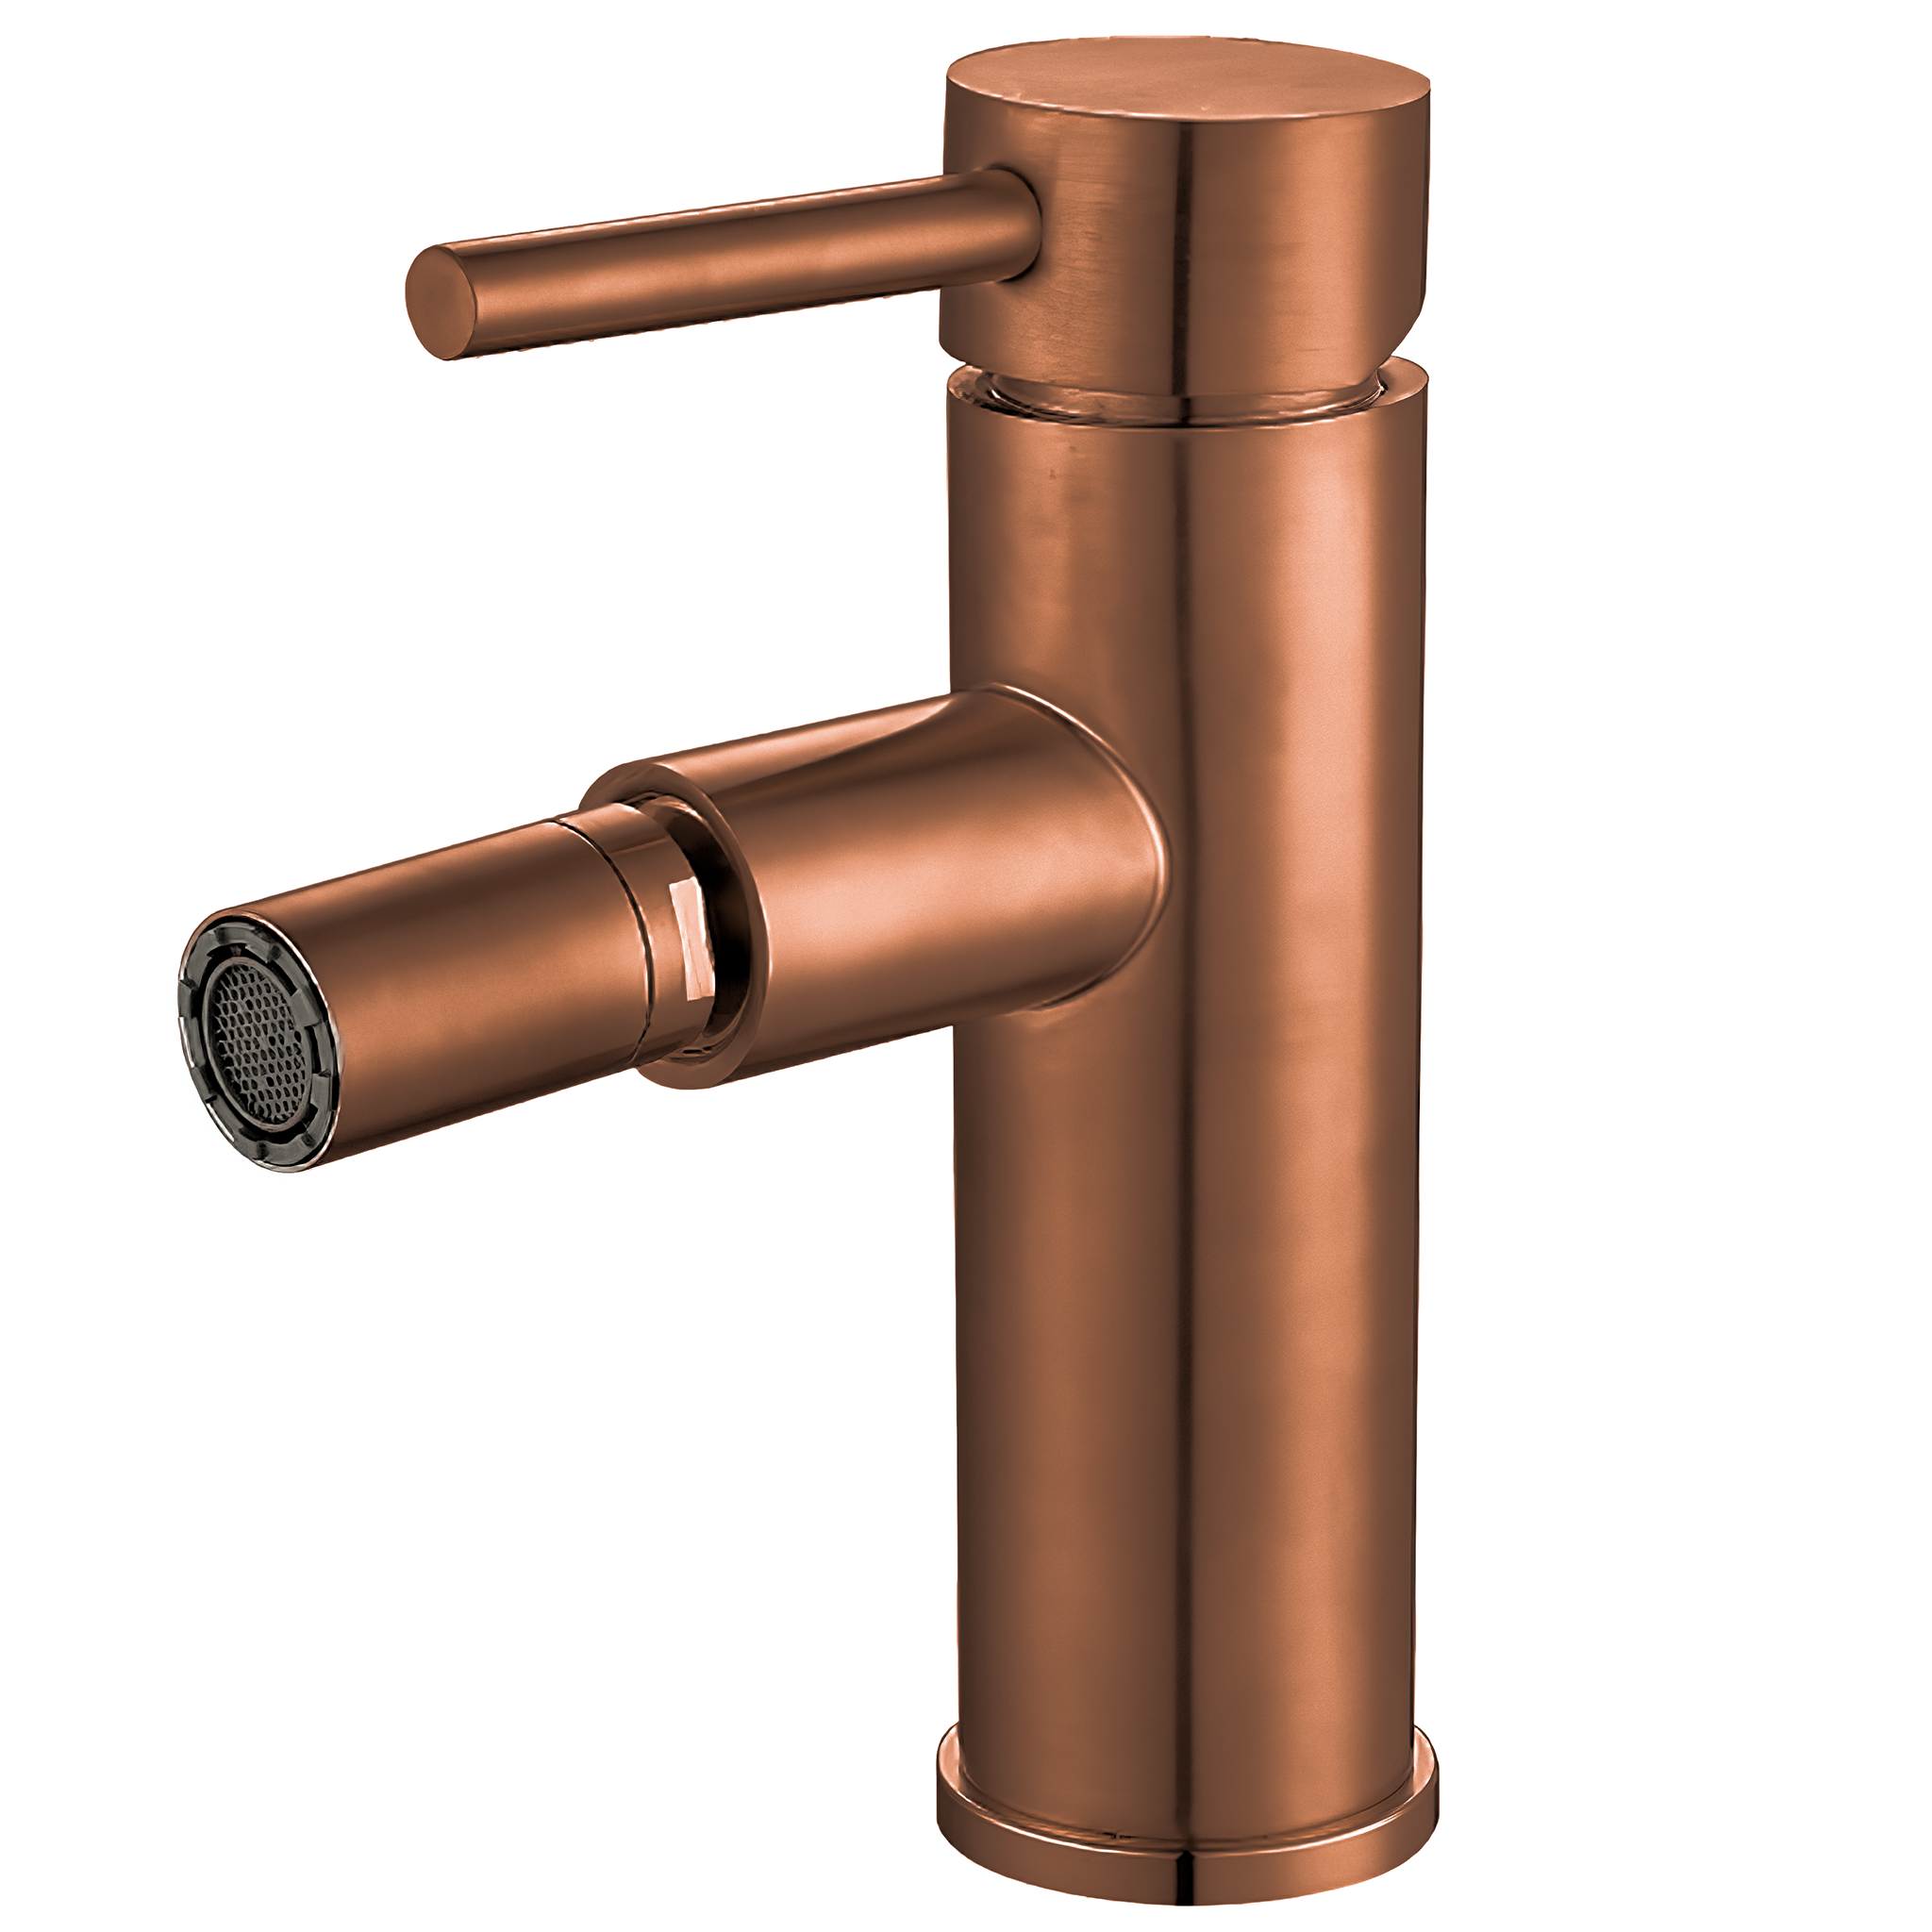 Válvula click clack para lavabo o bidé redondo oro claro rosa cepillado –  VALAZ – Fabricación y comercialización de grifería